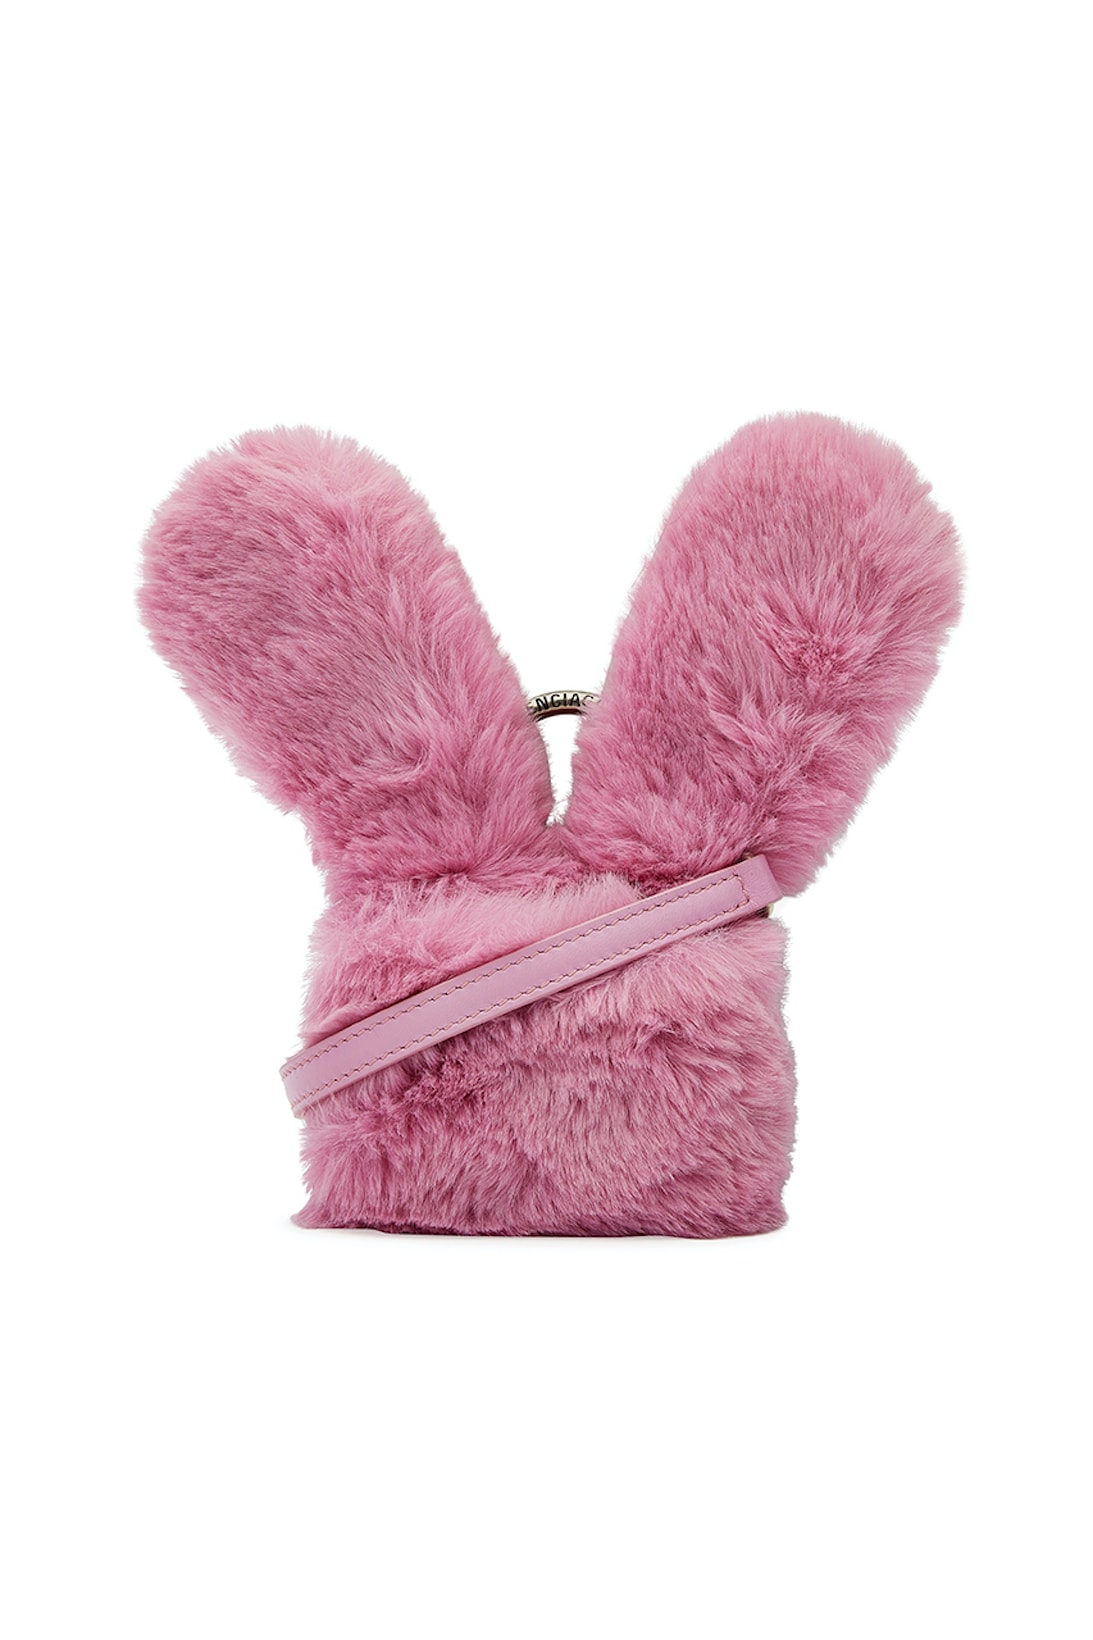 Balenciaga Pink Bunny Apple AirPOds Pro Cases Faux Fur